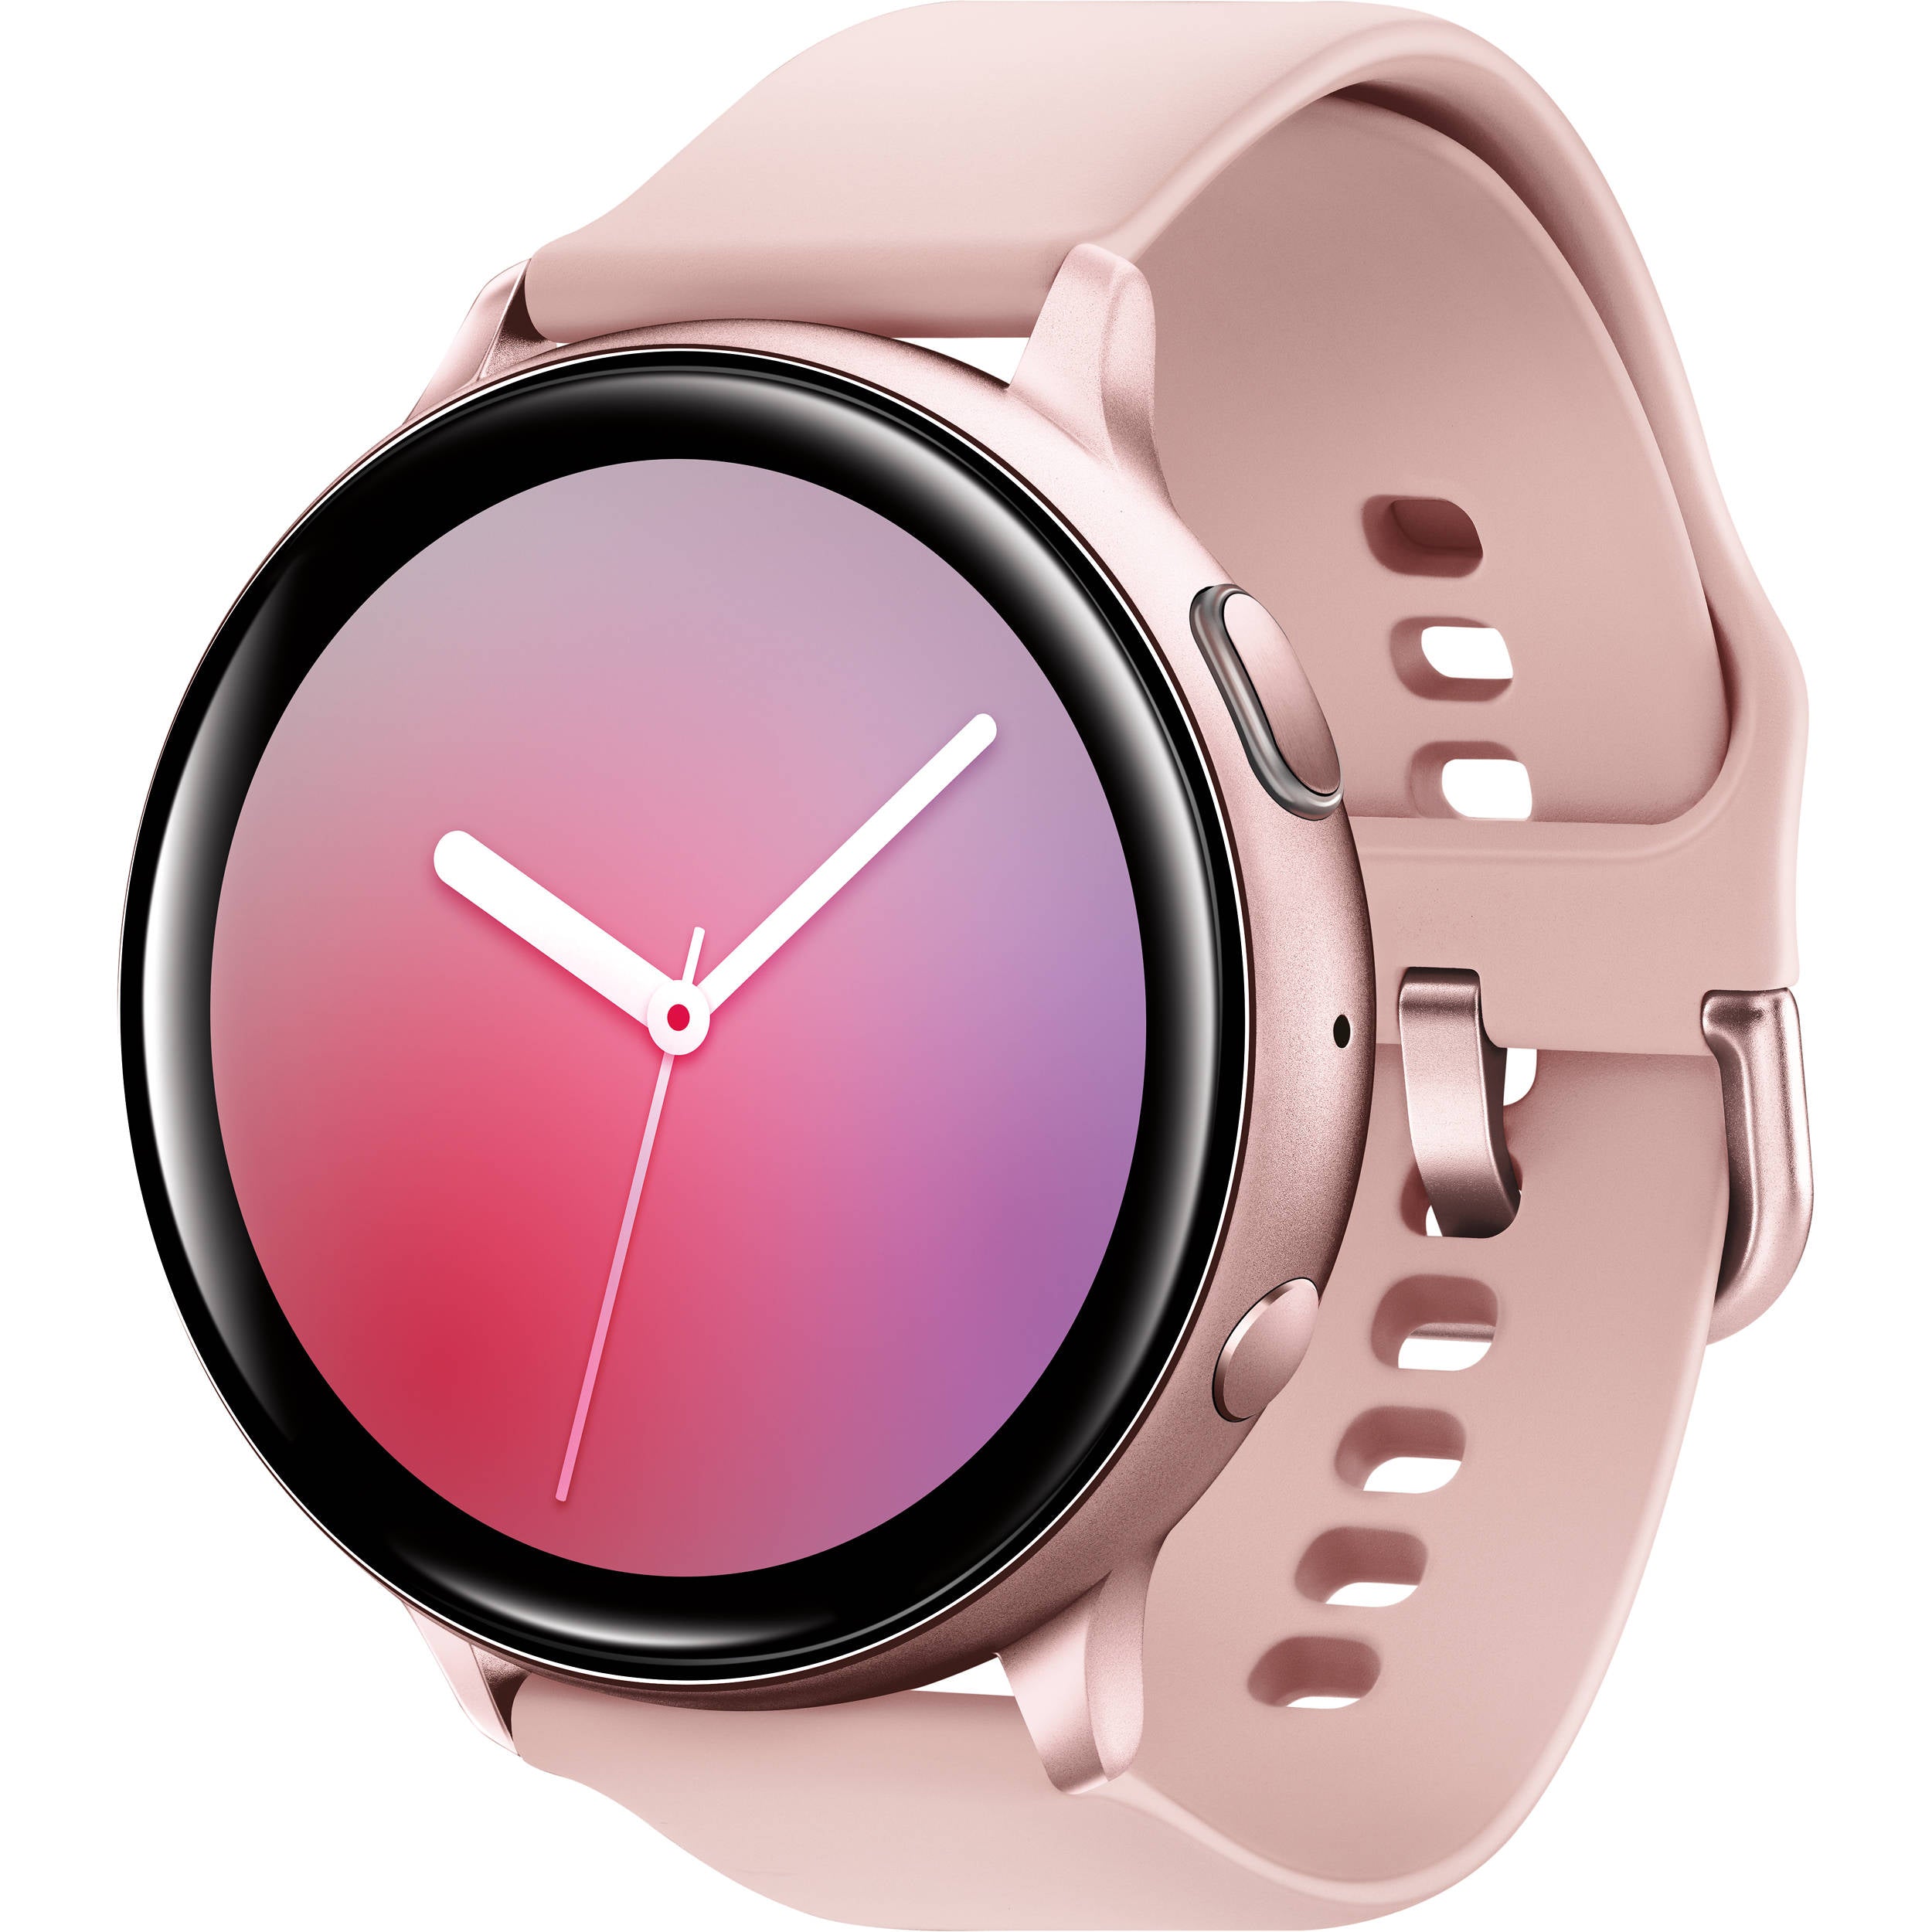 Samsung SR-SM-R830NZDAXAR-RB Galaxy Watch Active2 44mm Bluetooth Pink Gold - Seller Refurbished